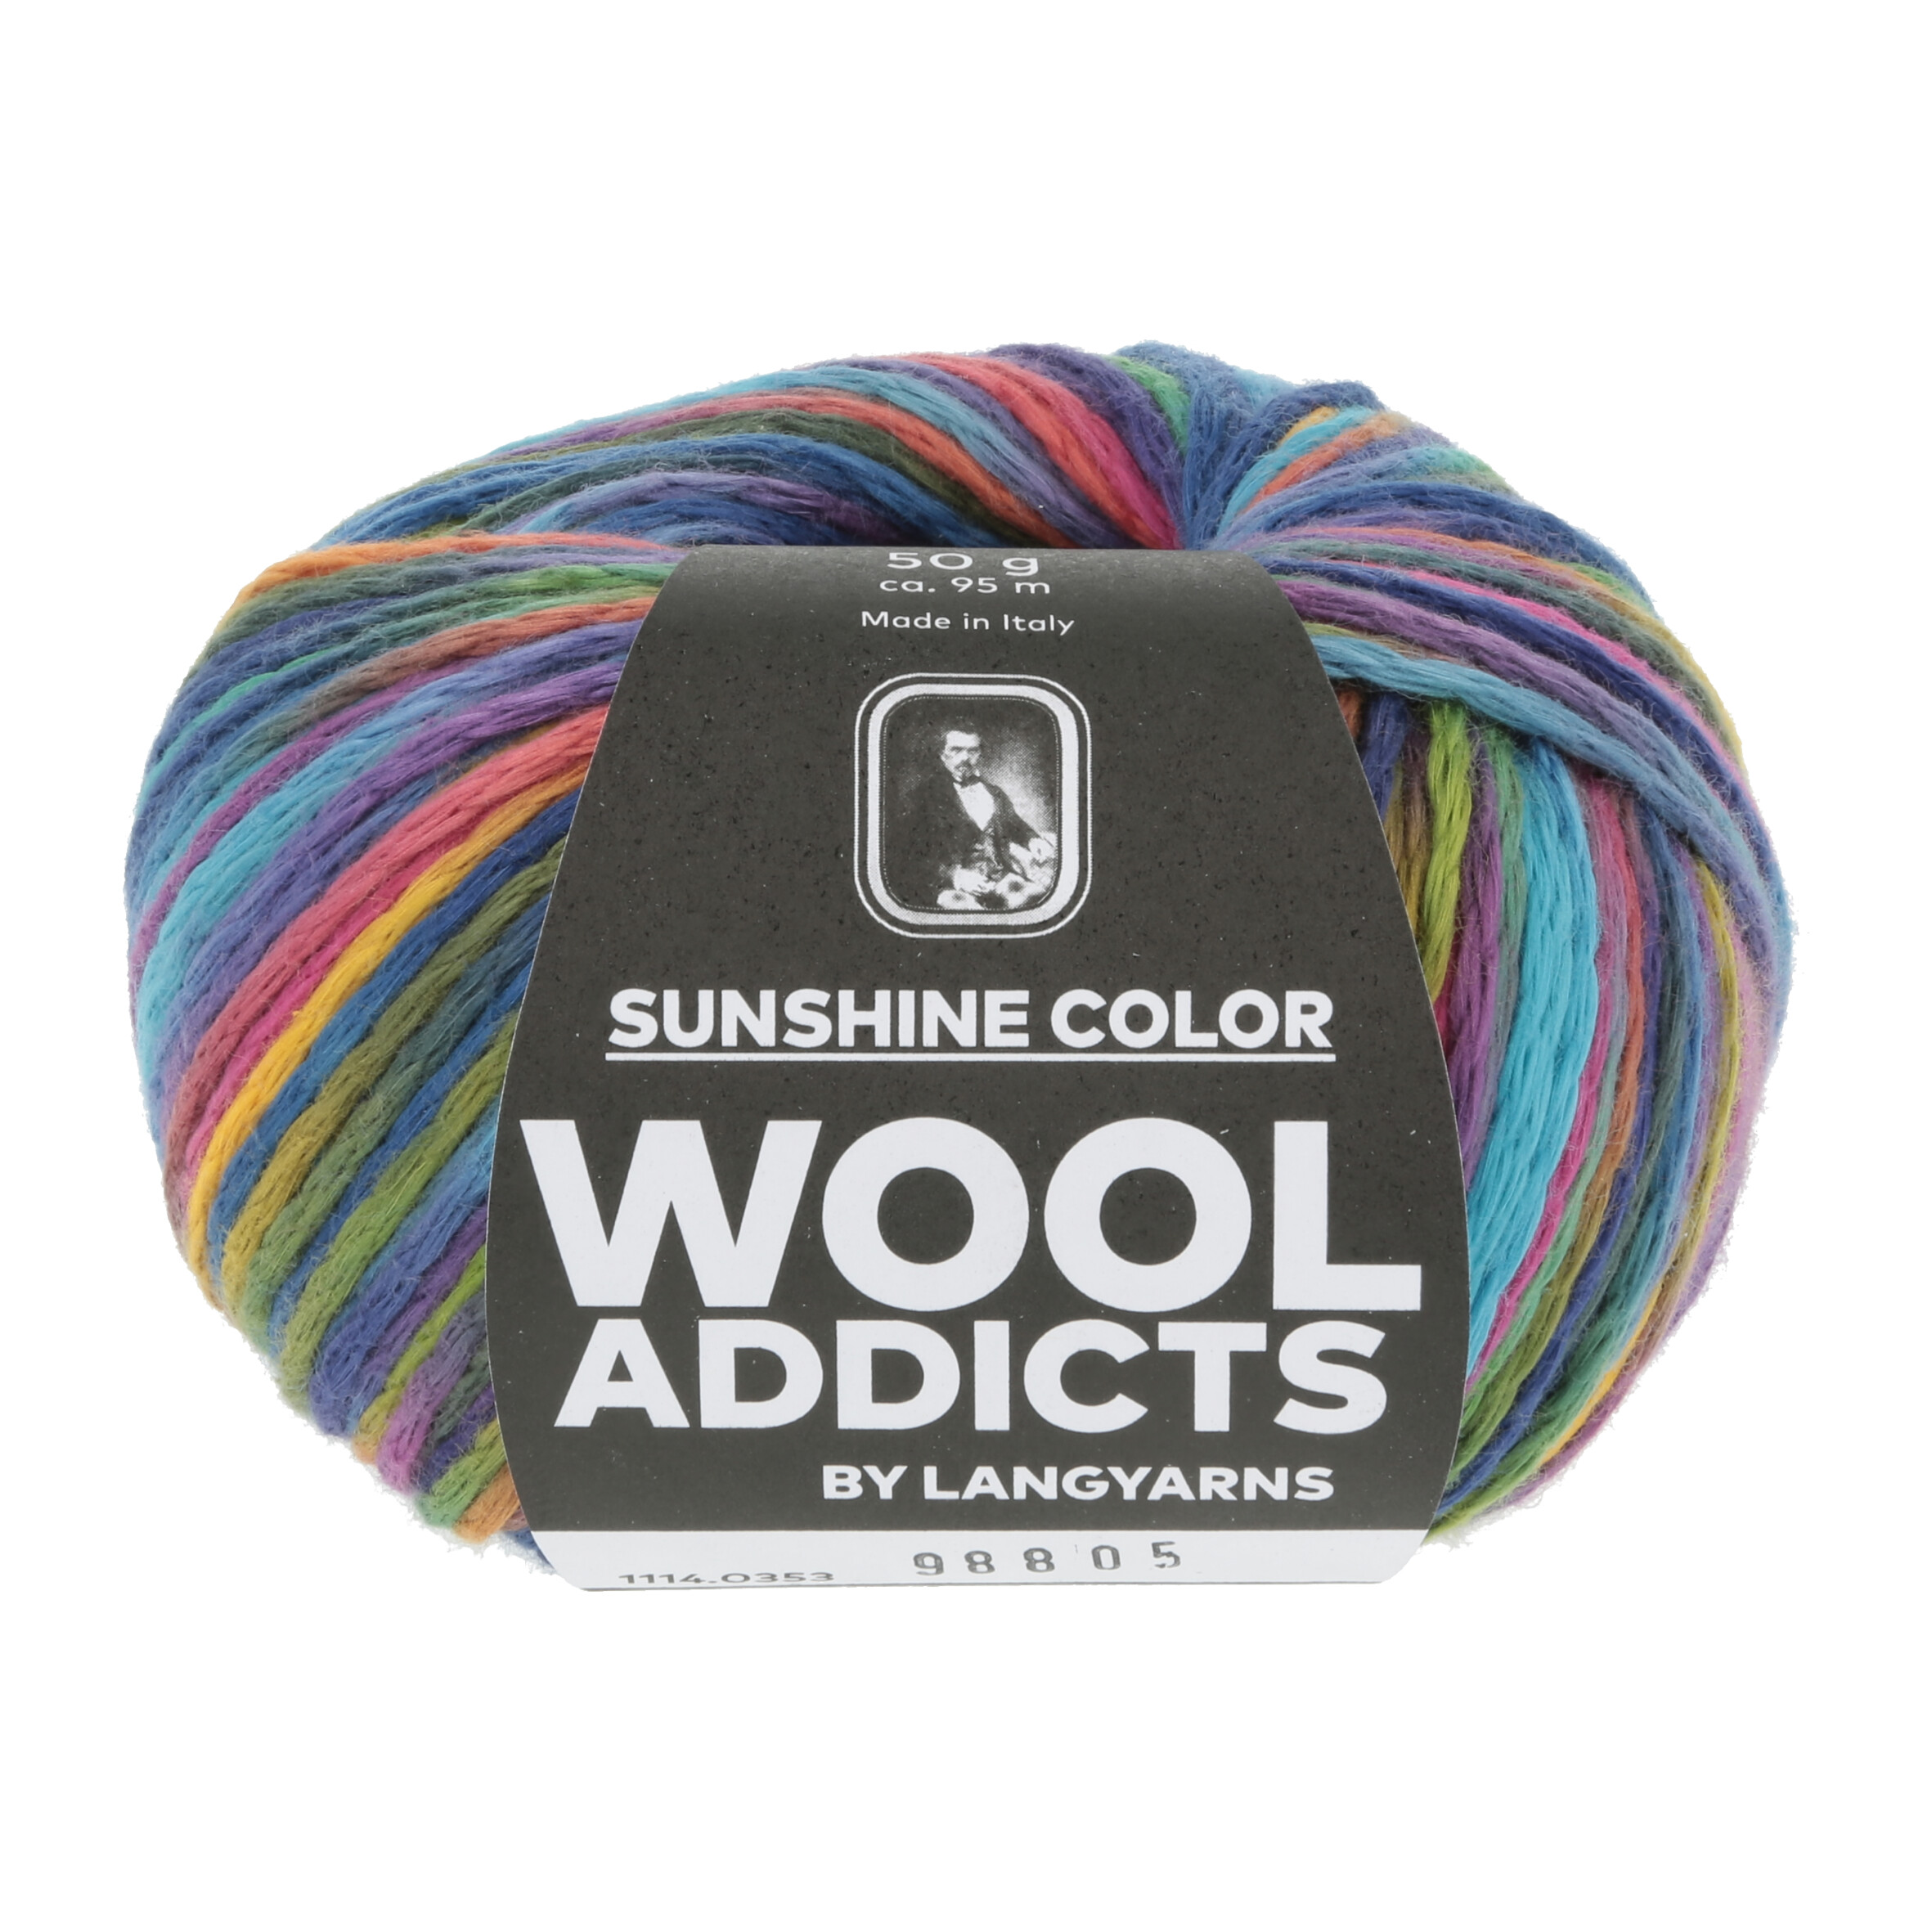 WOOLADDICTS Sunshine Color